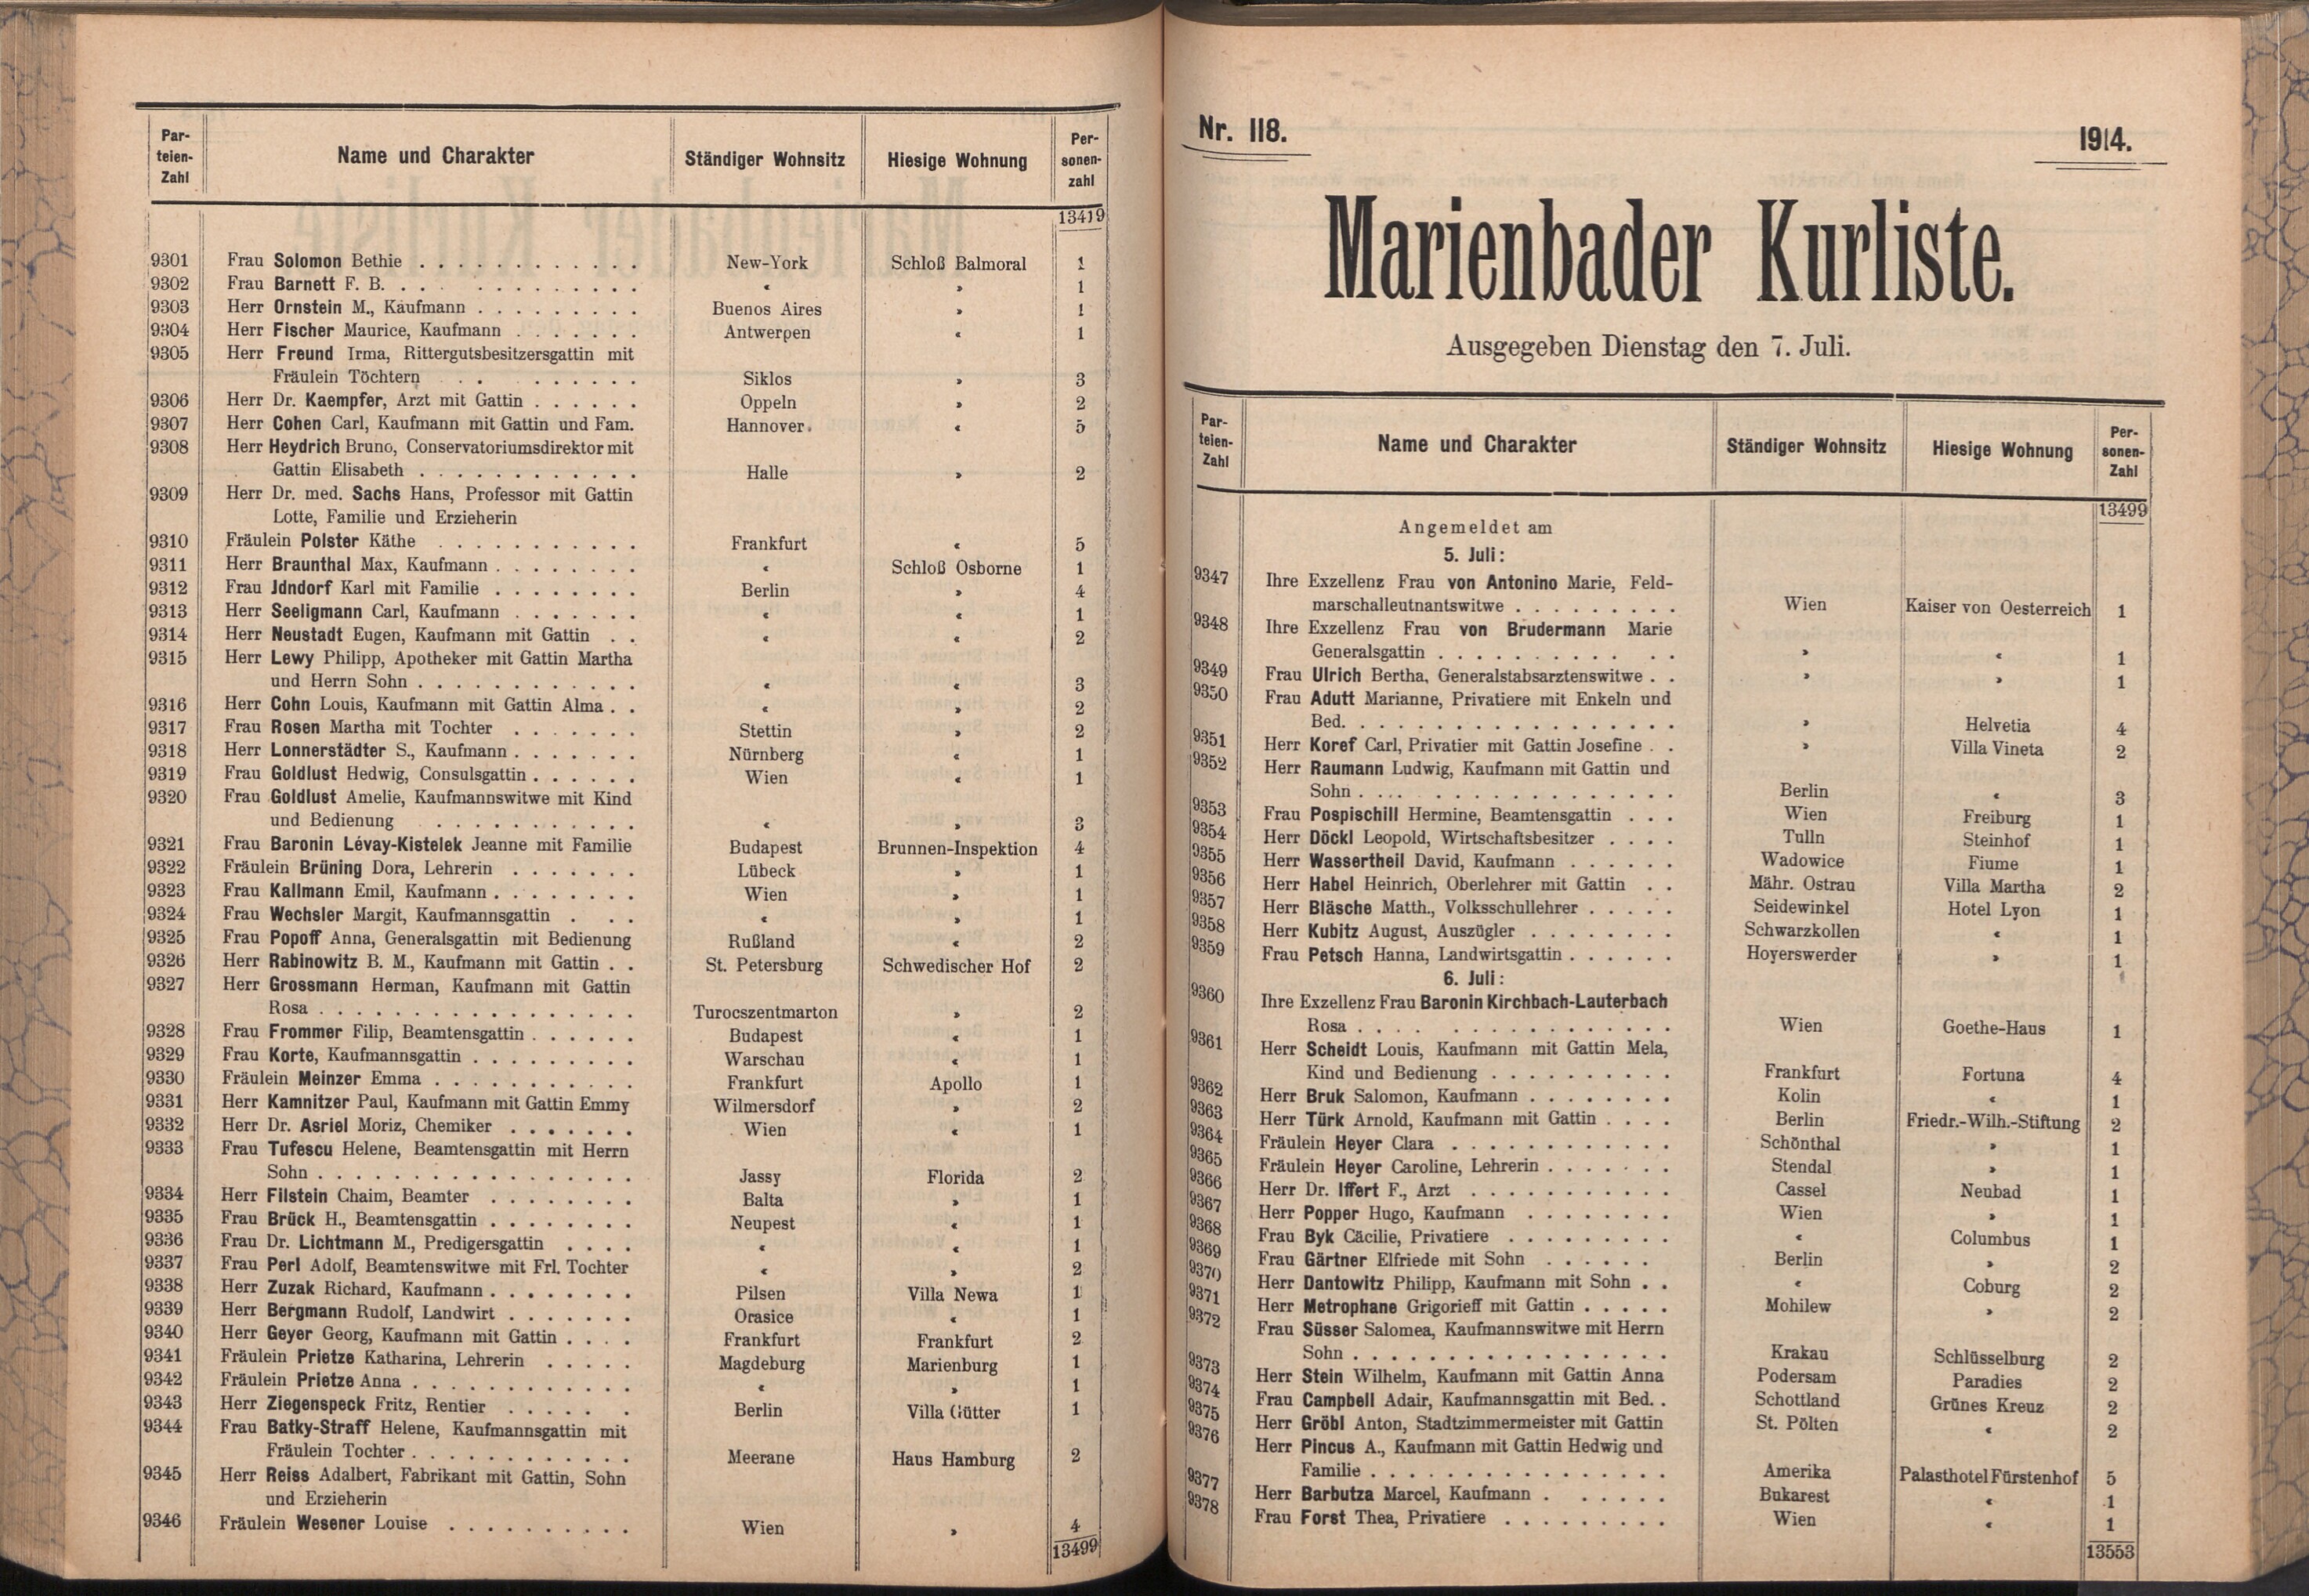 213. soap-ch_knihovna_marienbader-kurliste-1914_2130